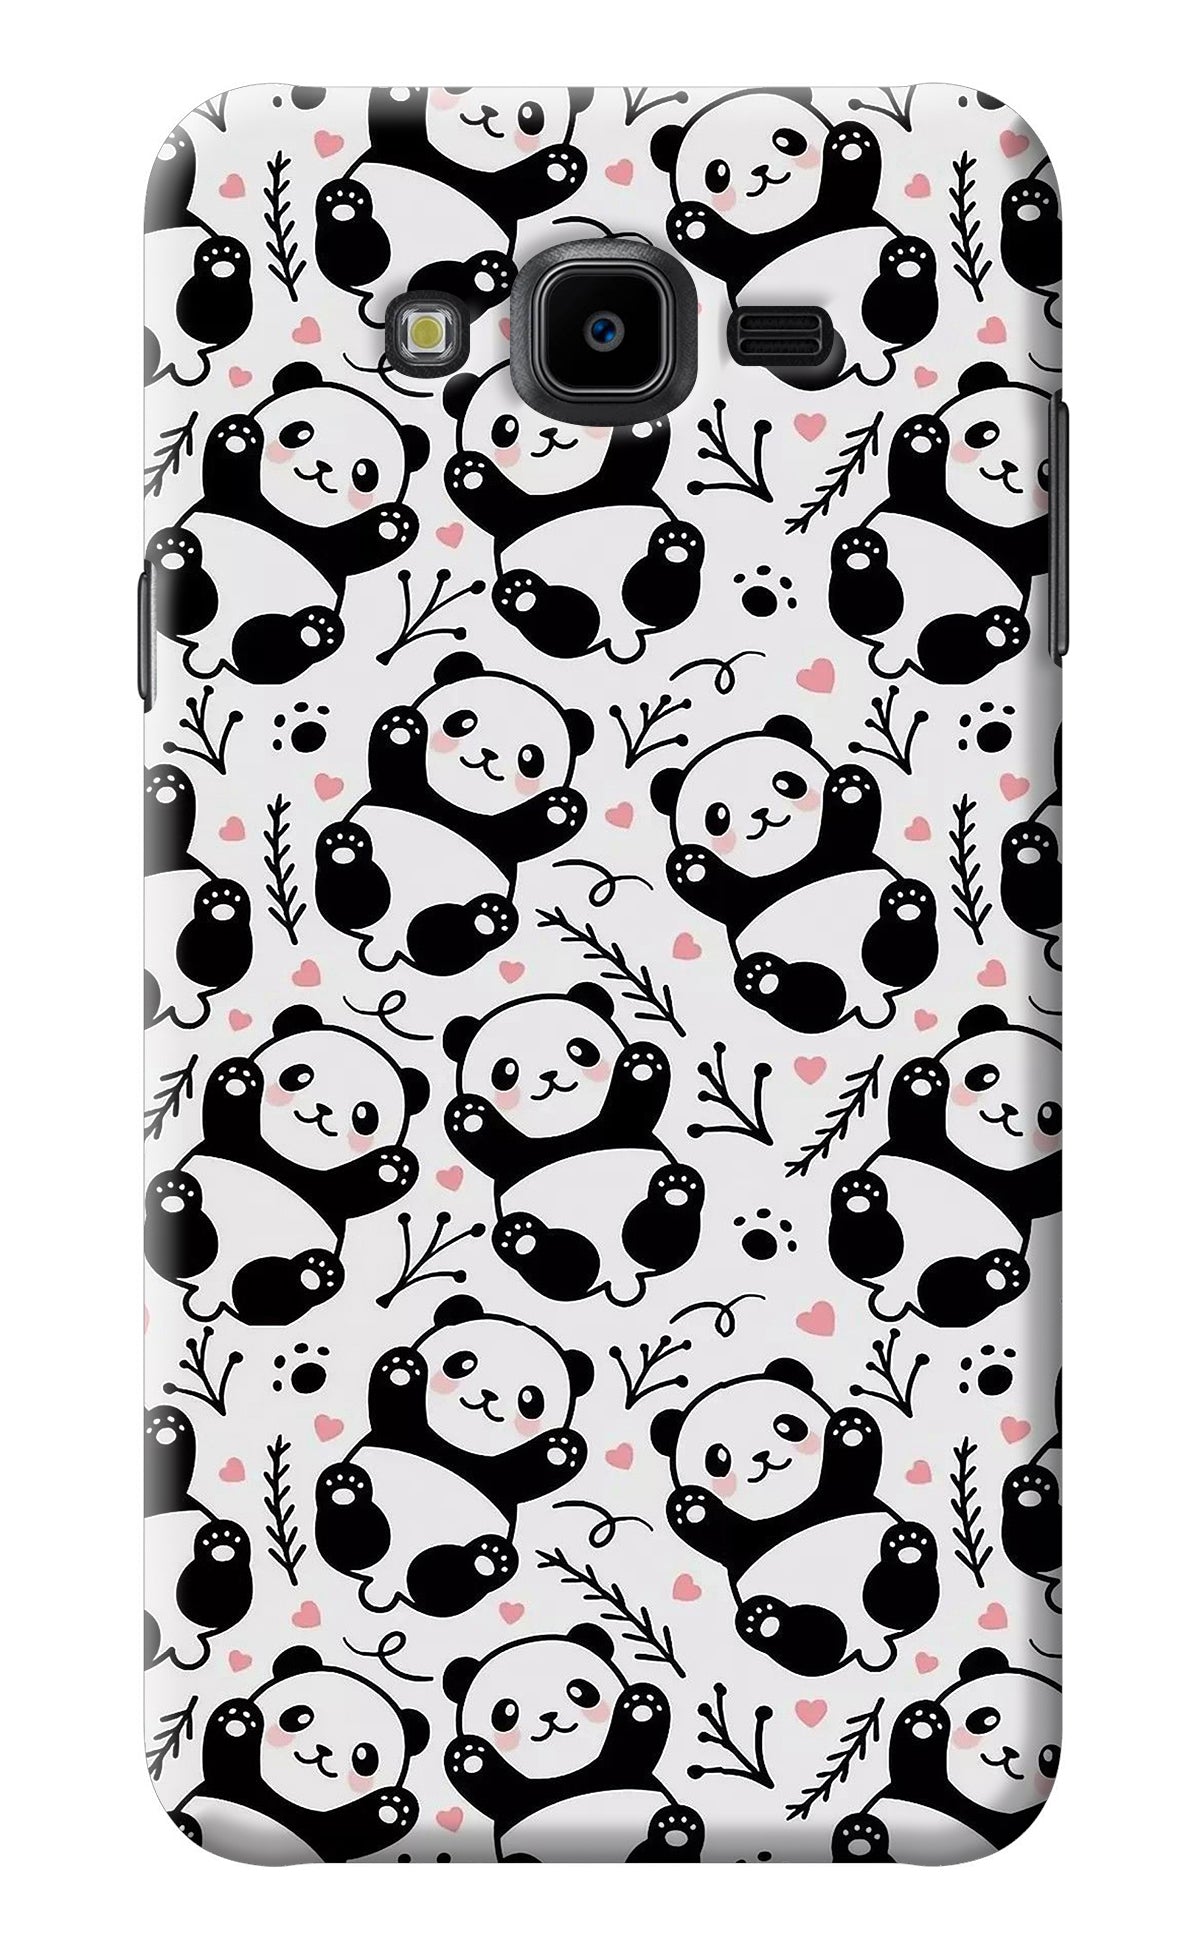 Cute Panda Samsung J7 Nxt Back Cover